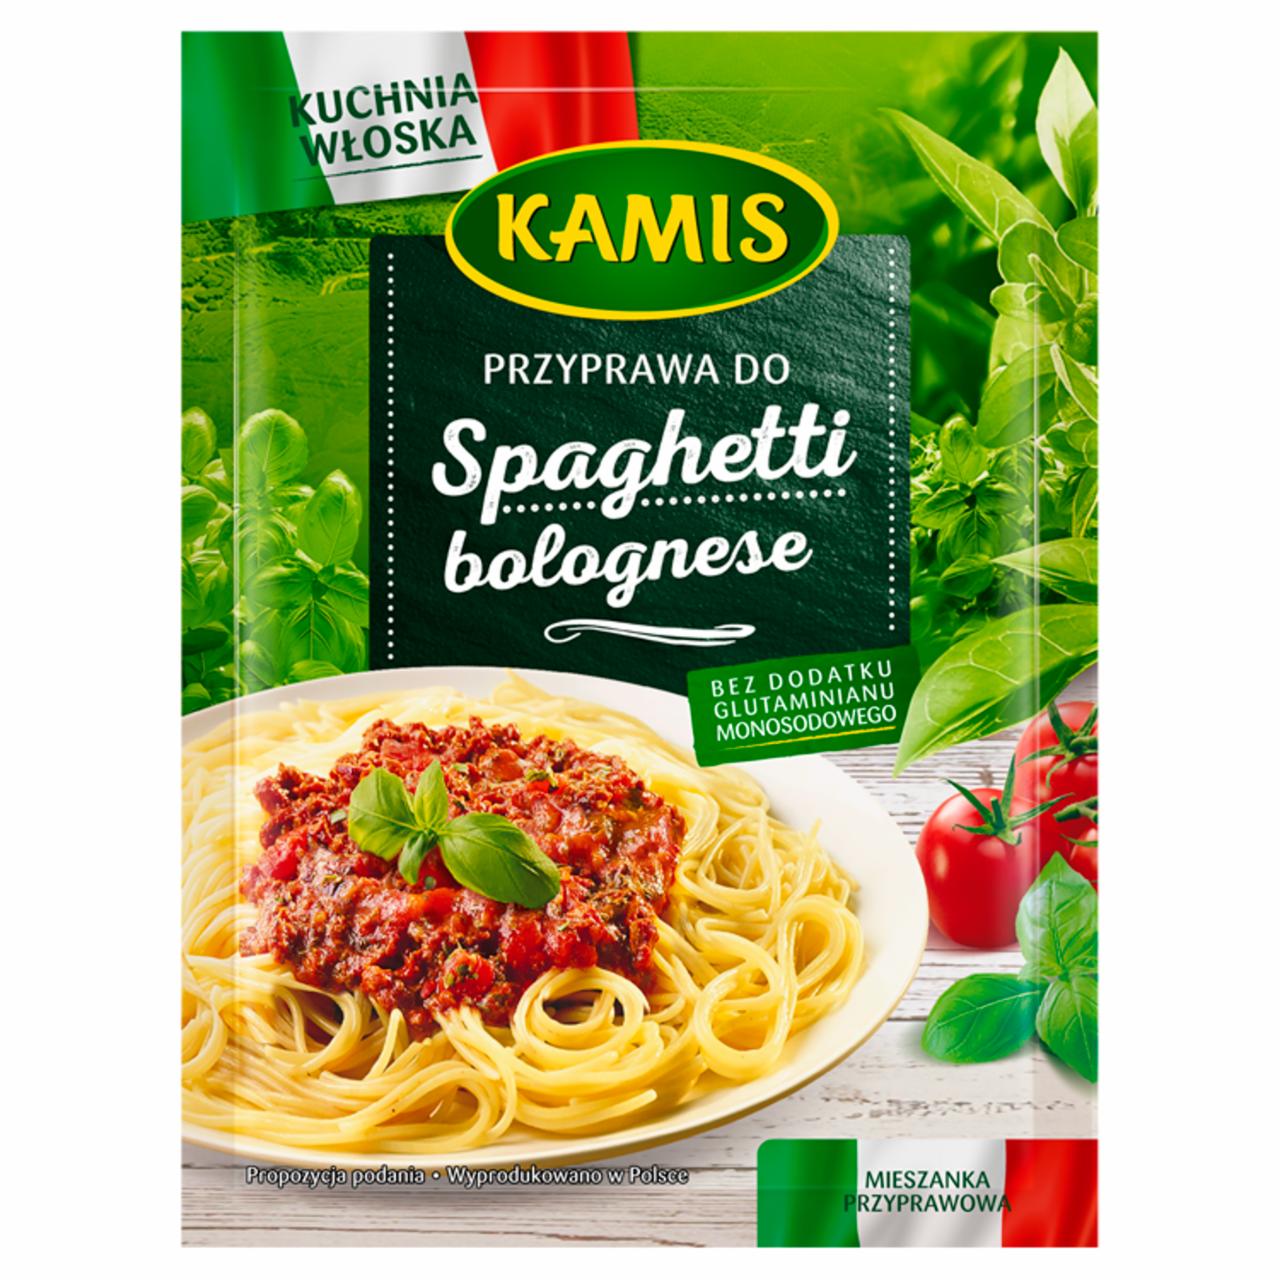 Photo - Kamis Kuchnia włoska Spaghetti Bolognese Seasoning Spice Mix 15 g